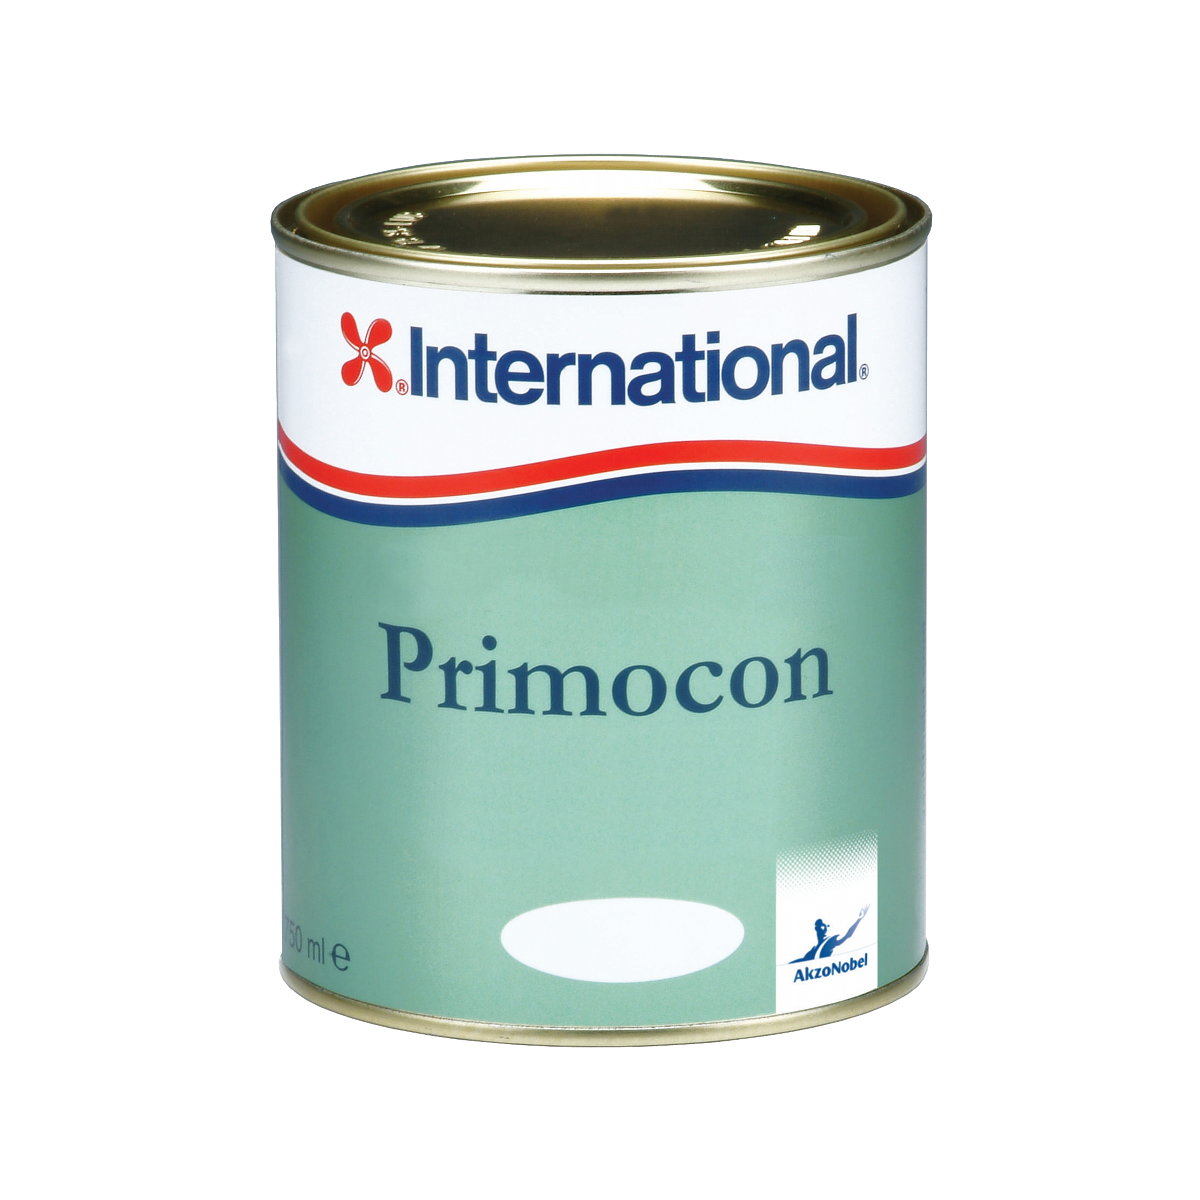 International Primocon primer - grijs 750ml